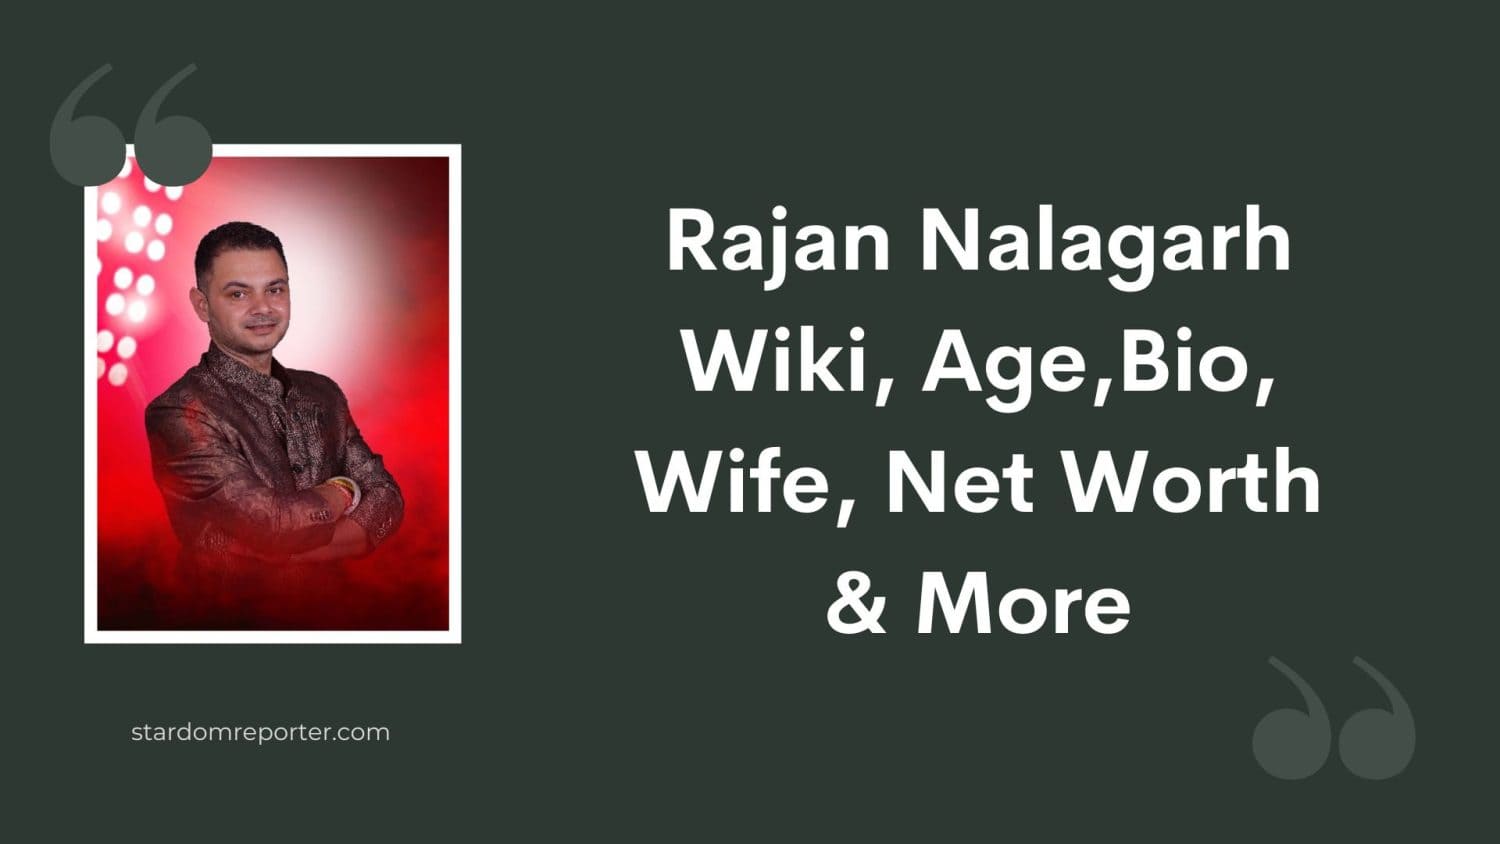 Rajan Nalagarh Wiki, Age, Bio, Wife, Net Worth & More - 11